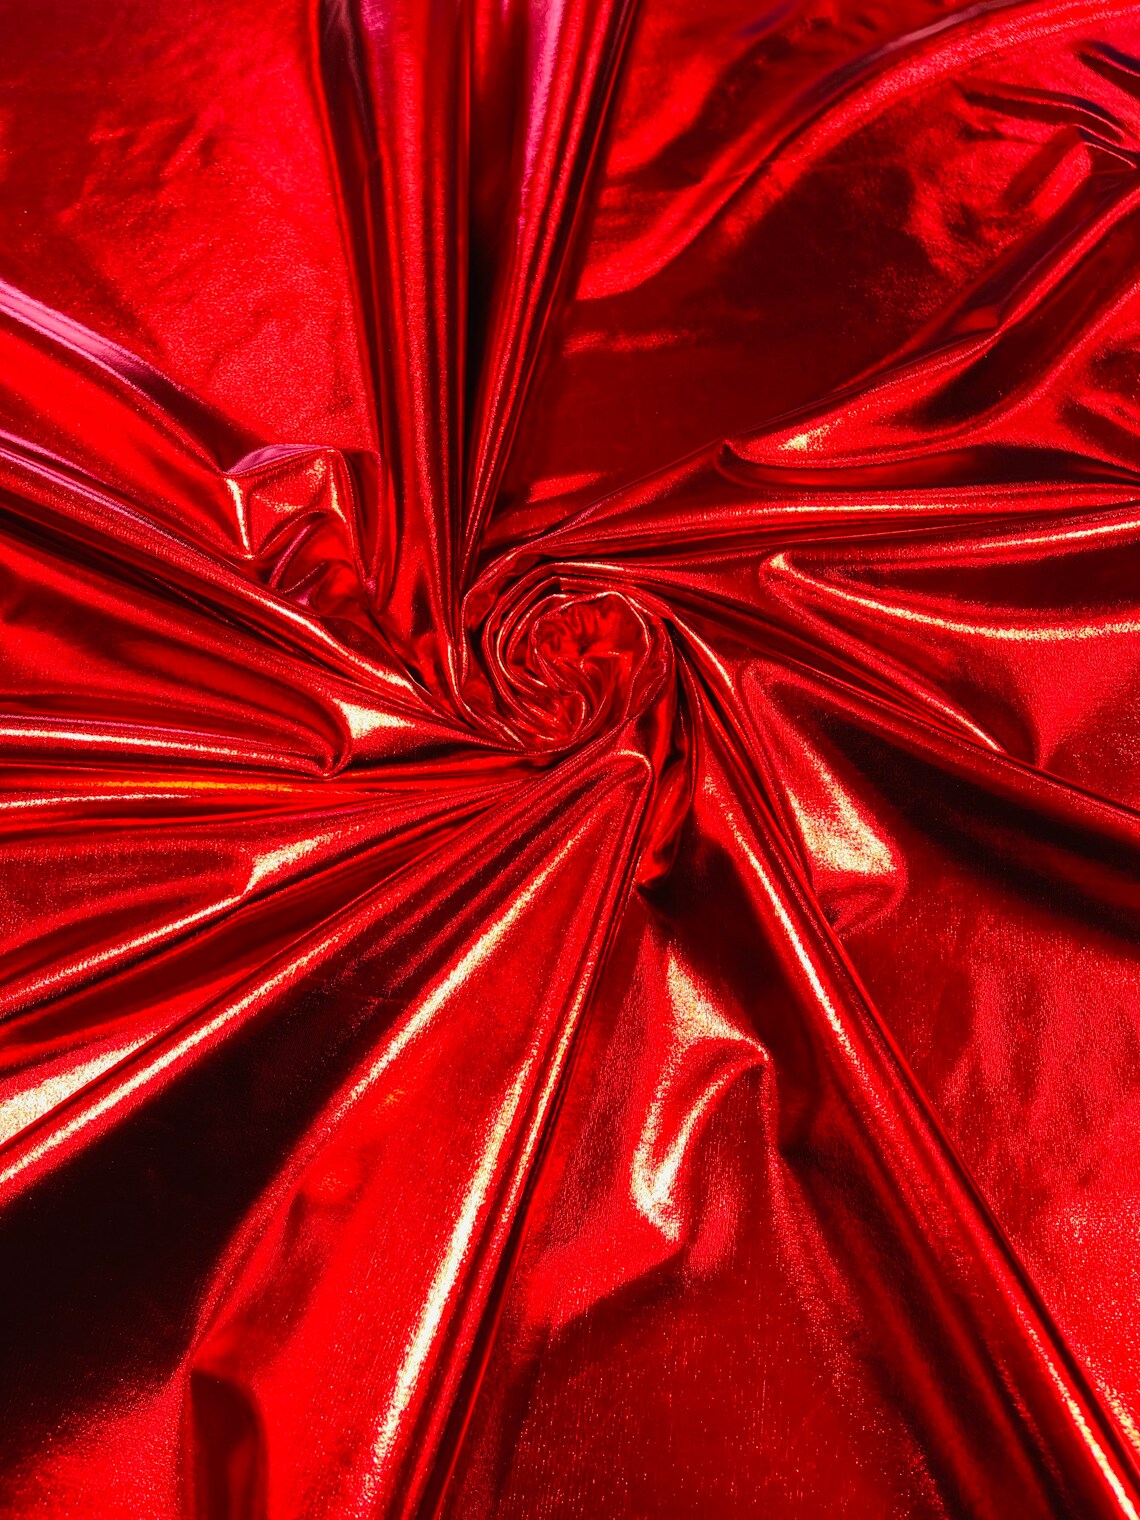 shiny red fabric